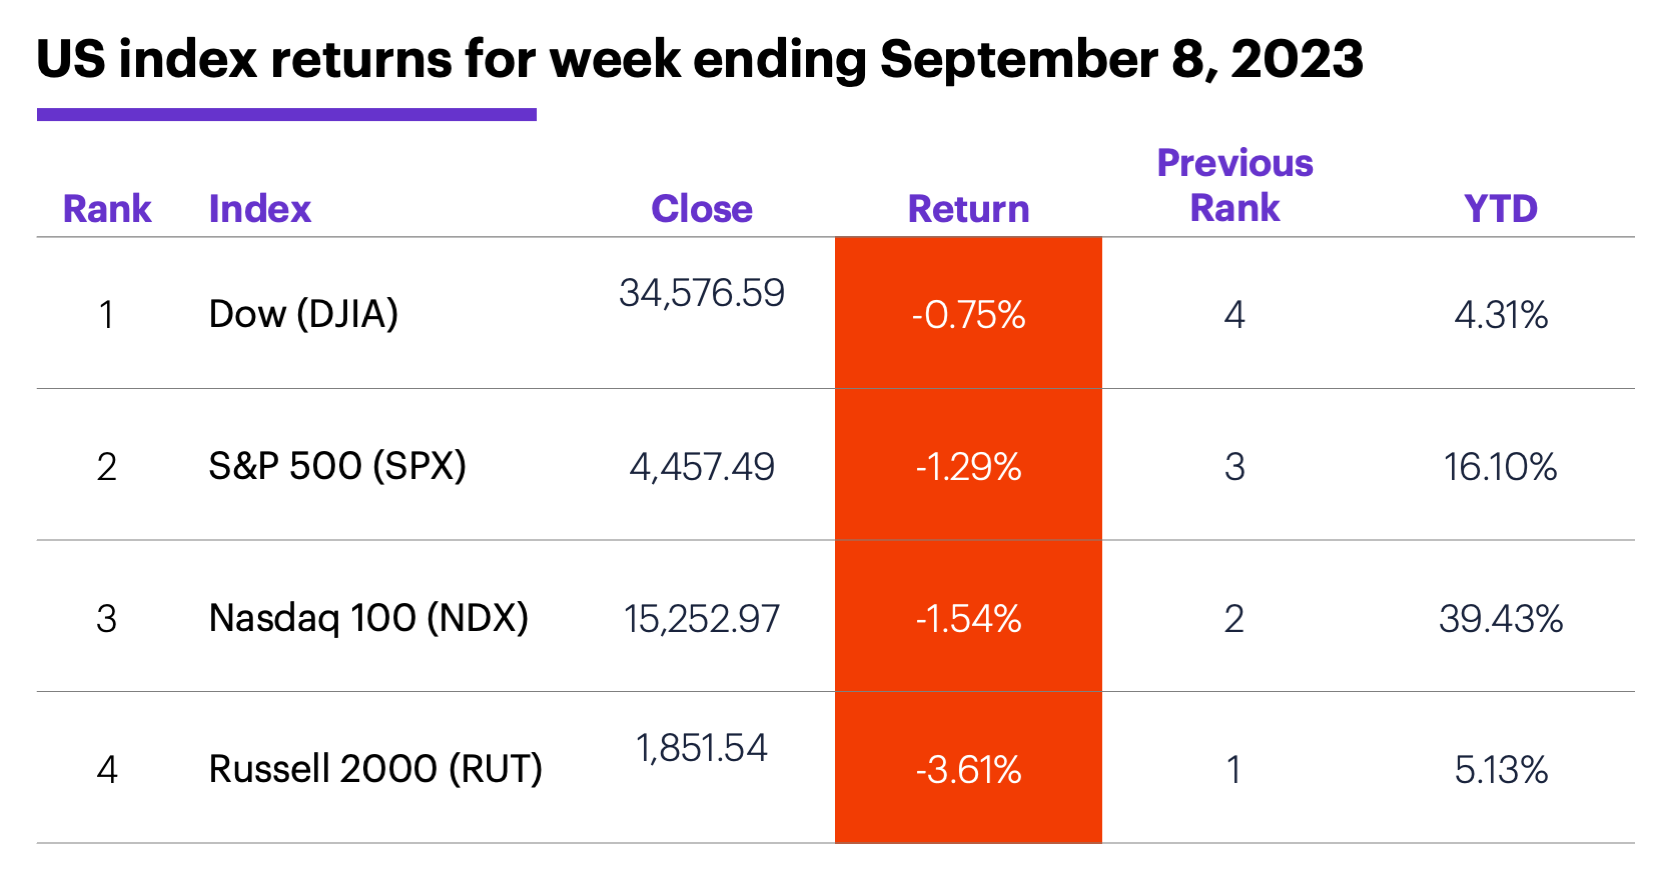 US stock index performance for week ending 9/8/23. S&P 500 (SPX), Nasdaq 100 (NDX), Russell 2000 (RUT), Dow Jones Industrial Average (DJIA).